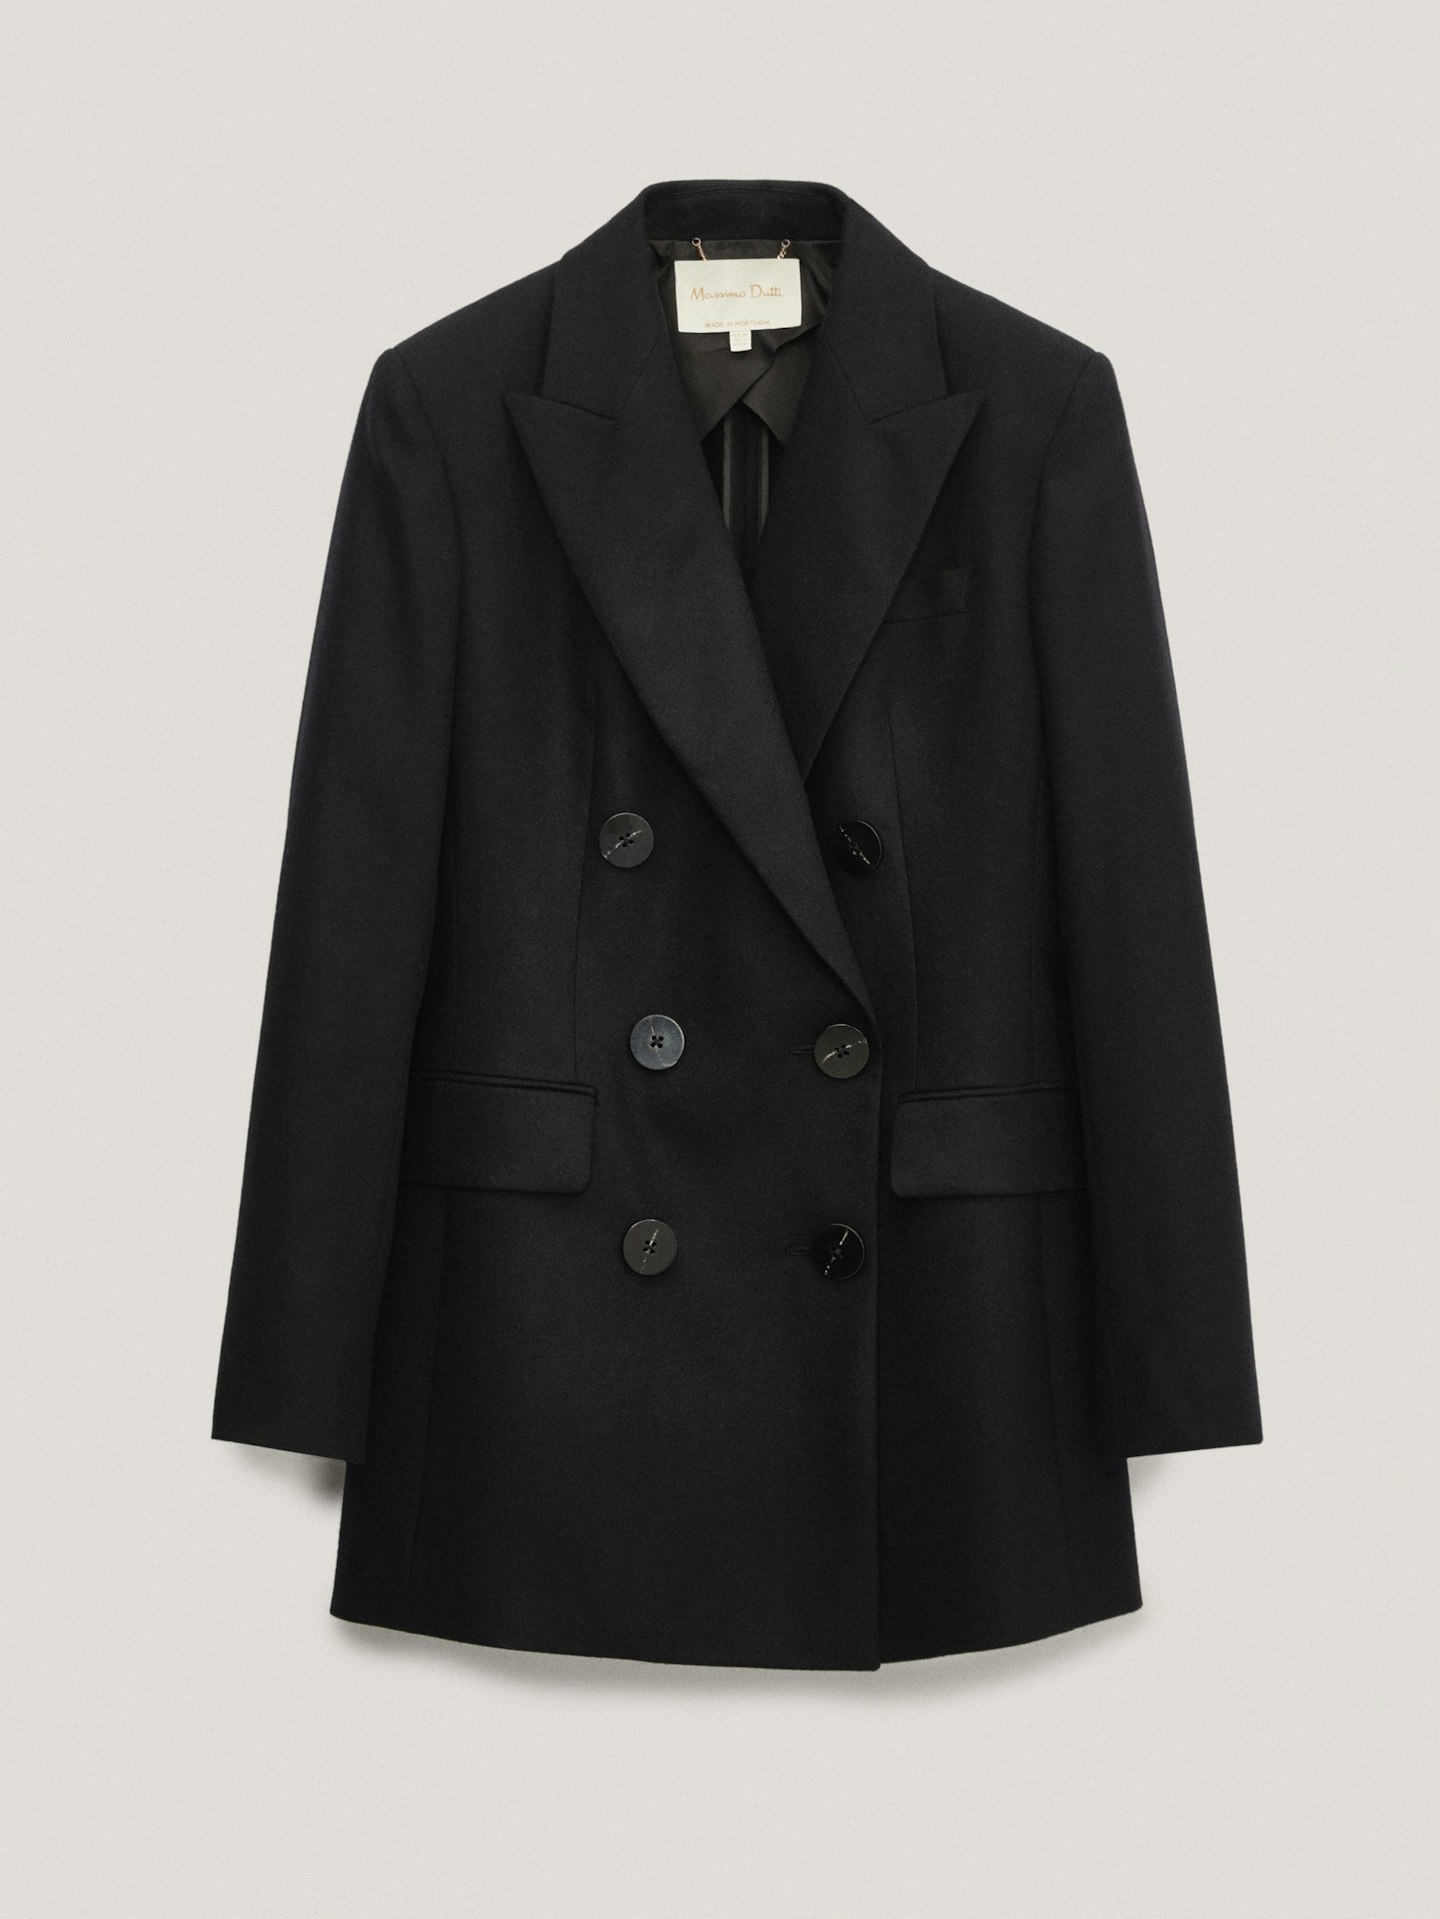 Massimo Dutti, Black Wool Double-Breasted Blazer, £179